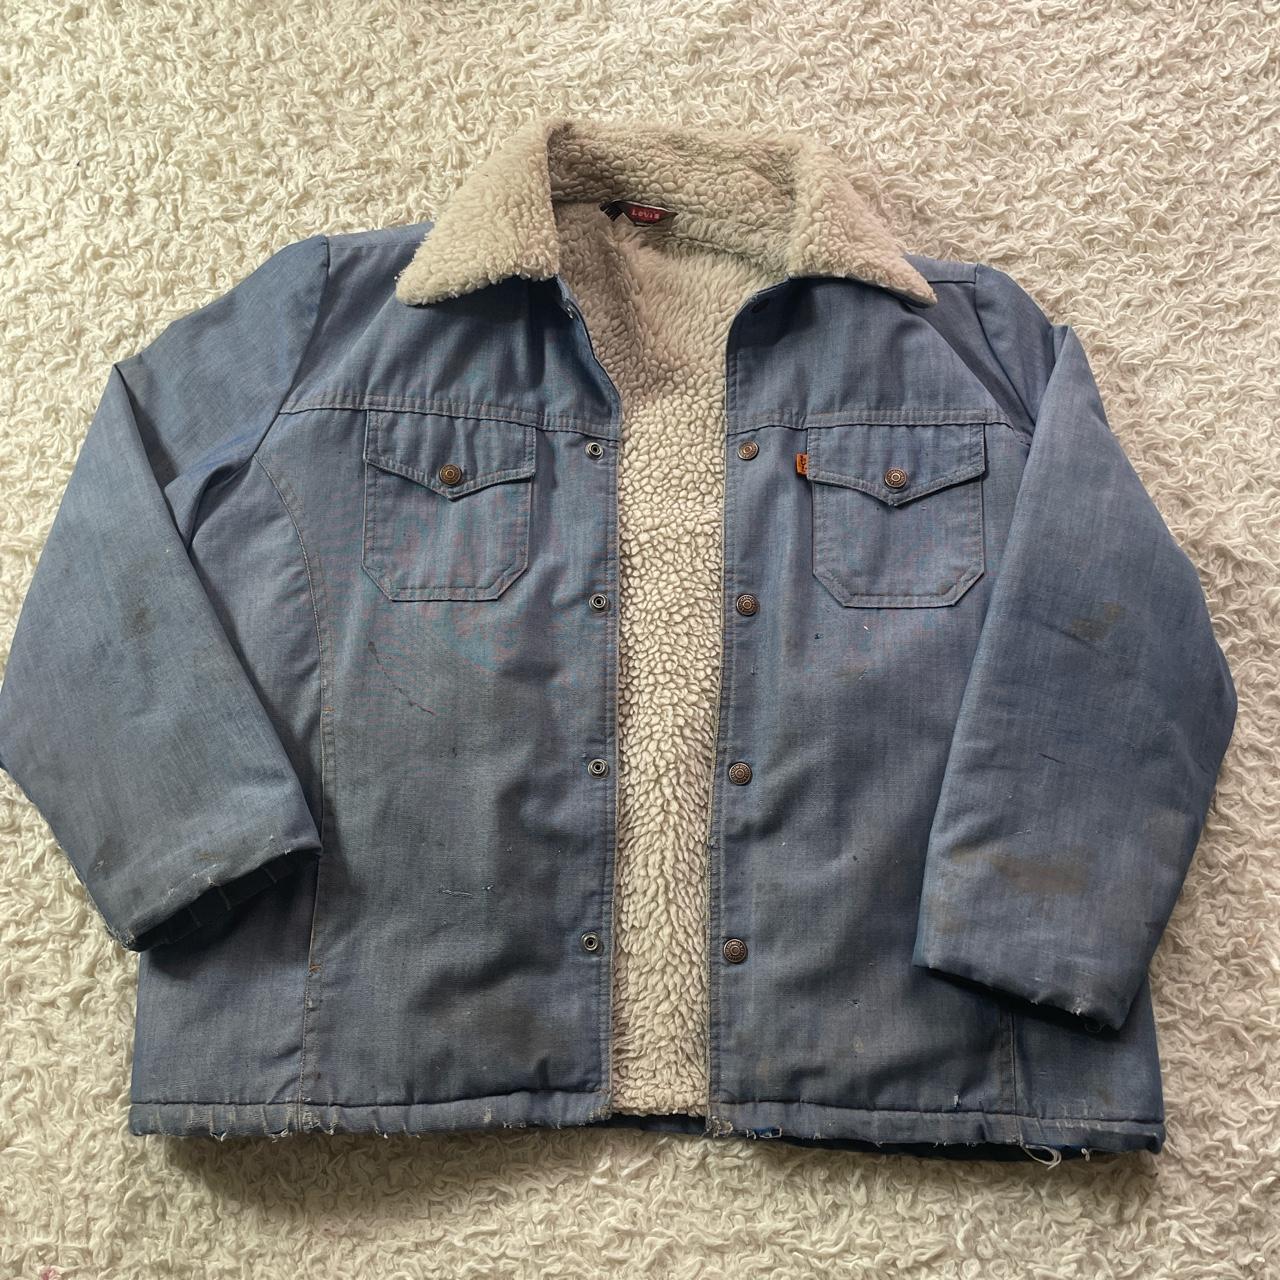 Vintage 1970s Levi’s Sherpa coat size large with... - Depop